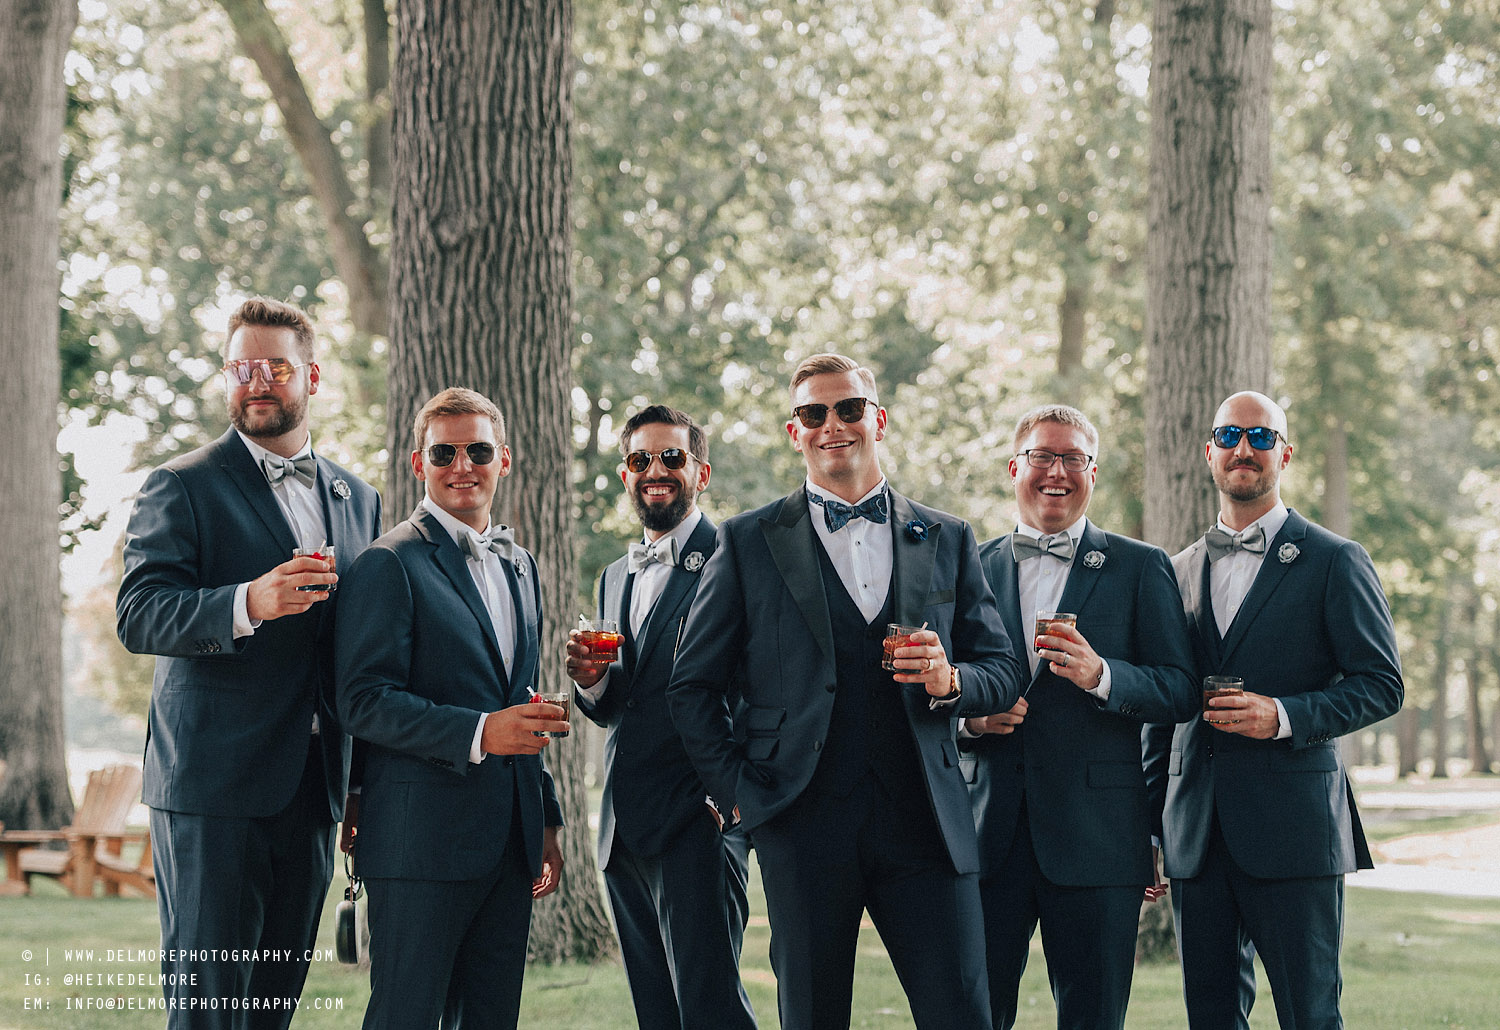 Top Windsor Wedding Photographers Editorial Style